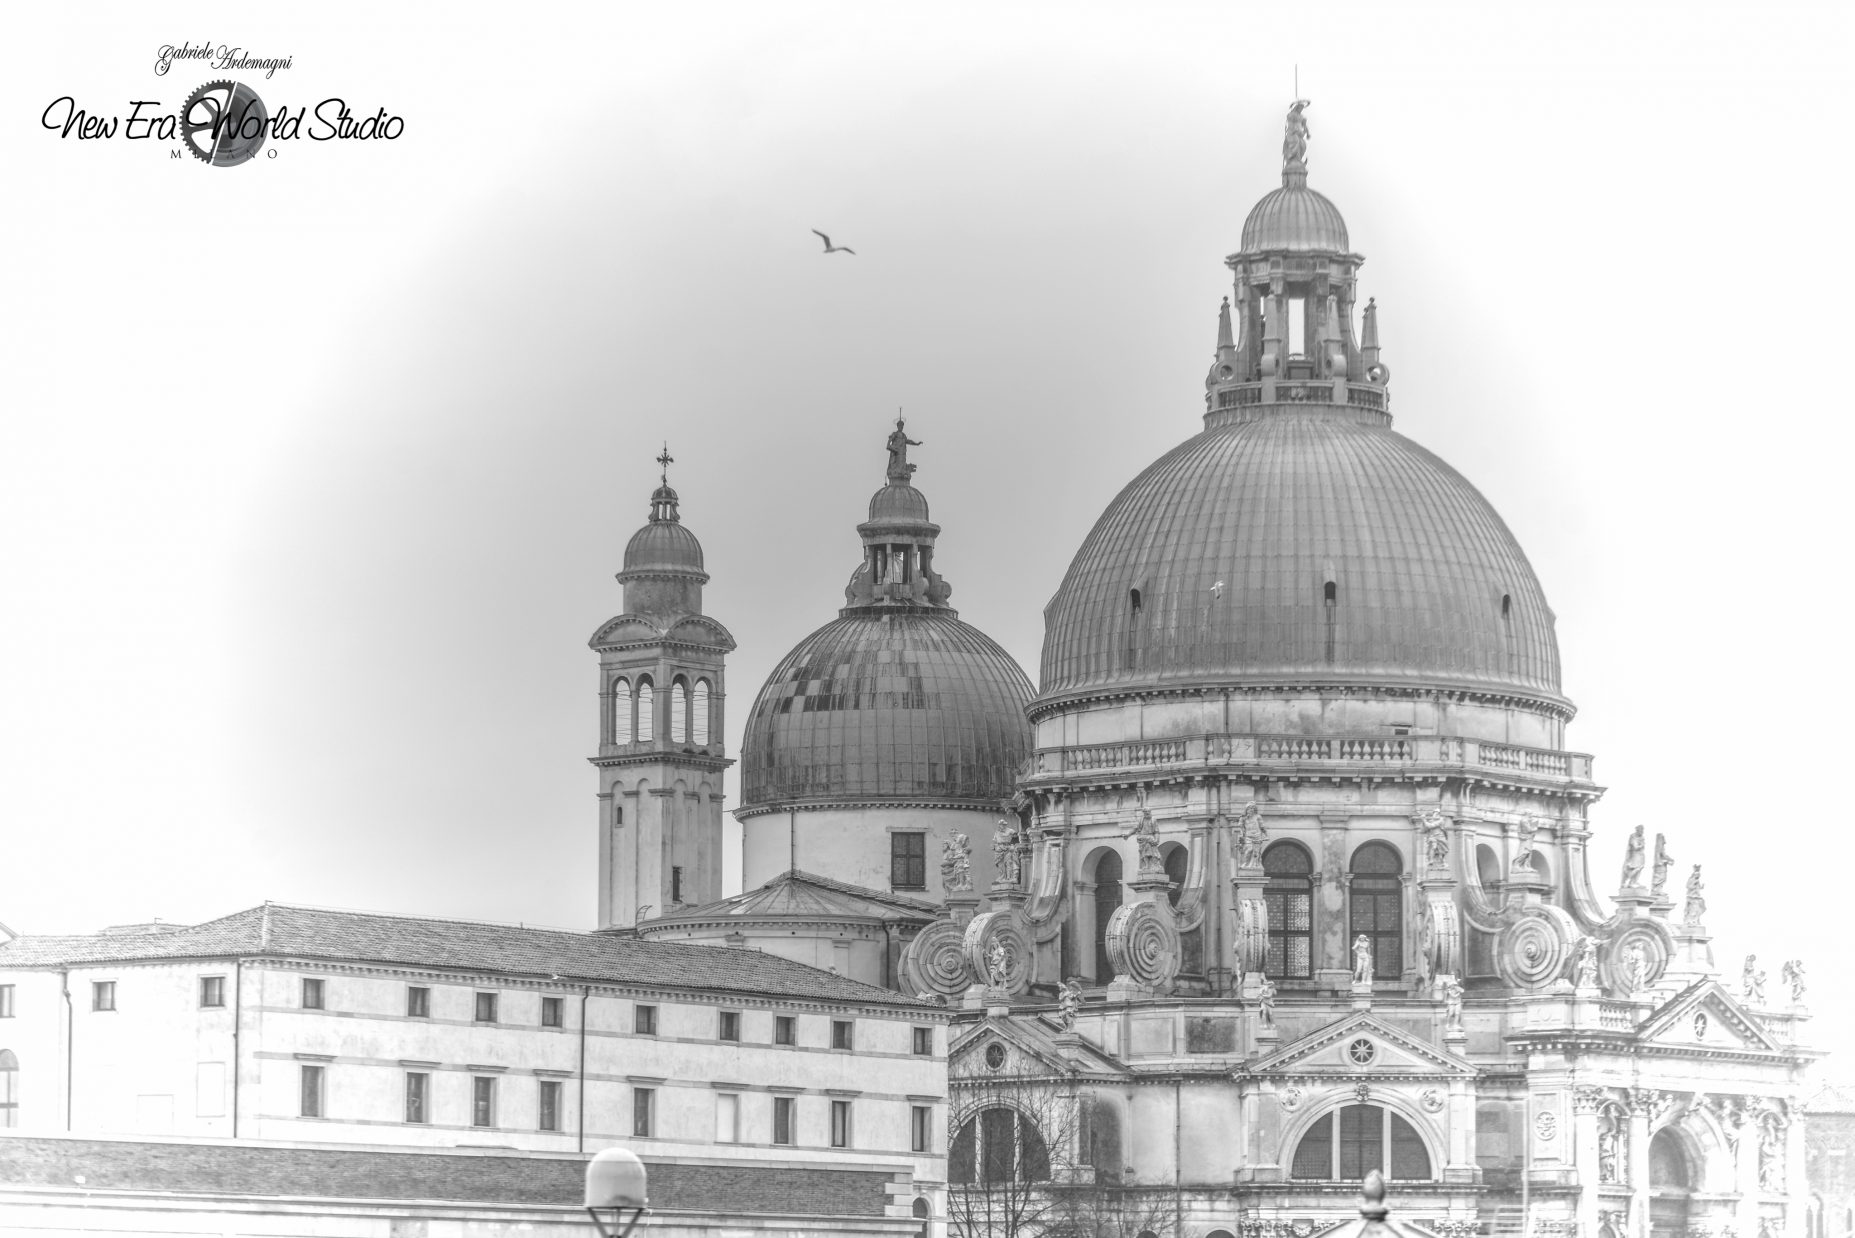 Venice Black & White Foto by Gabriele Ardemagni